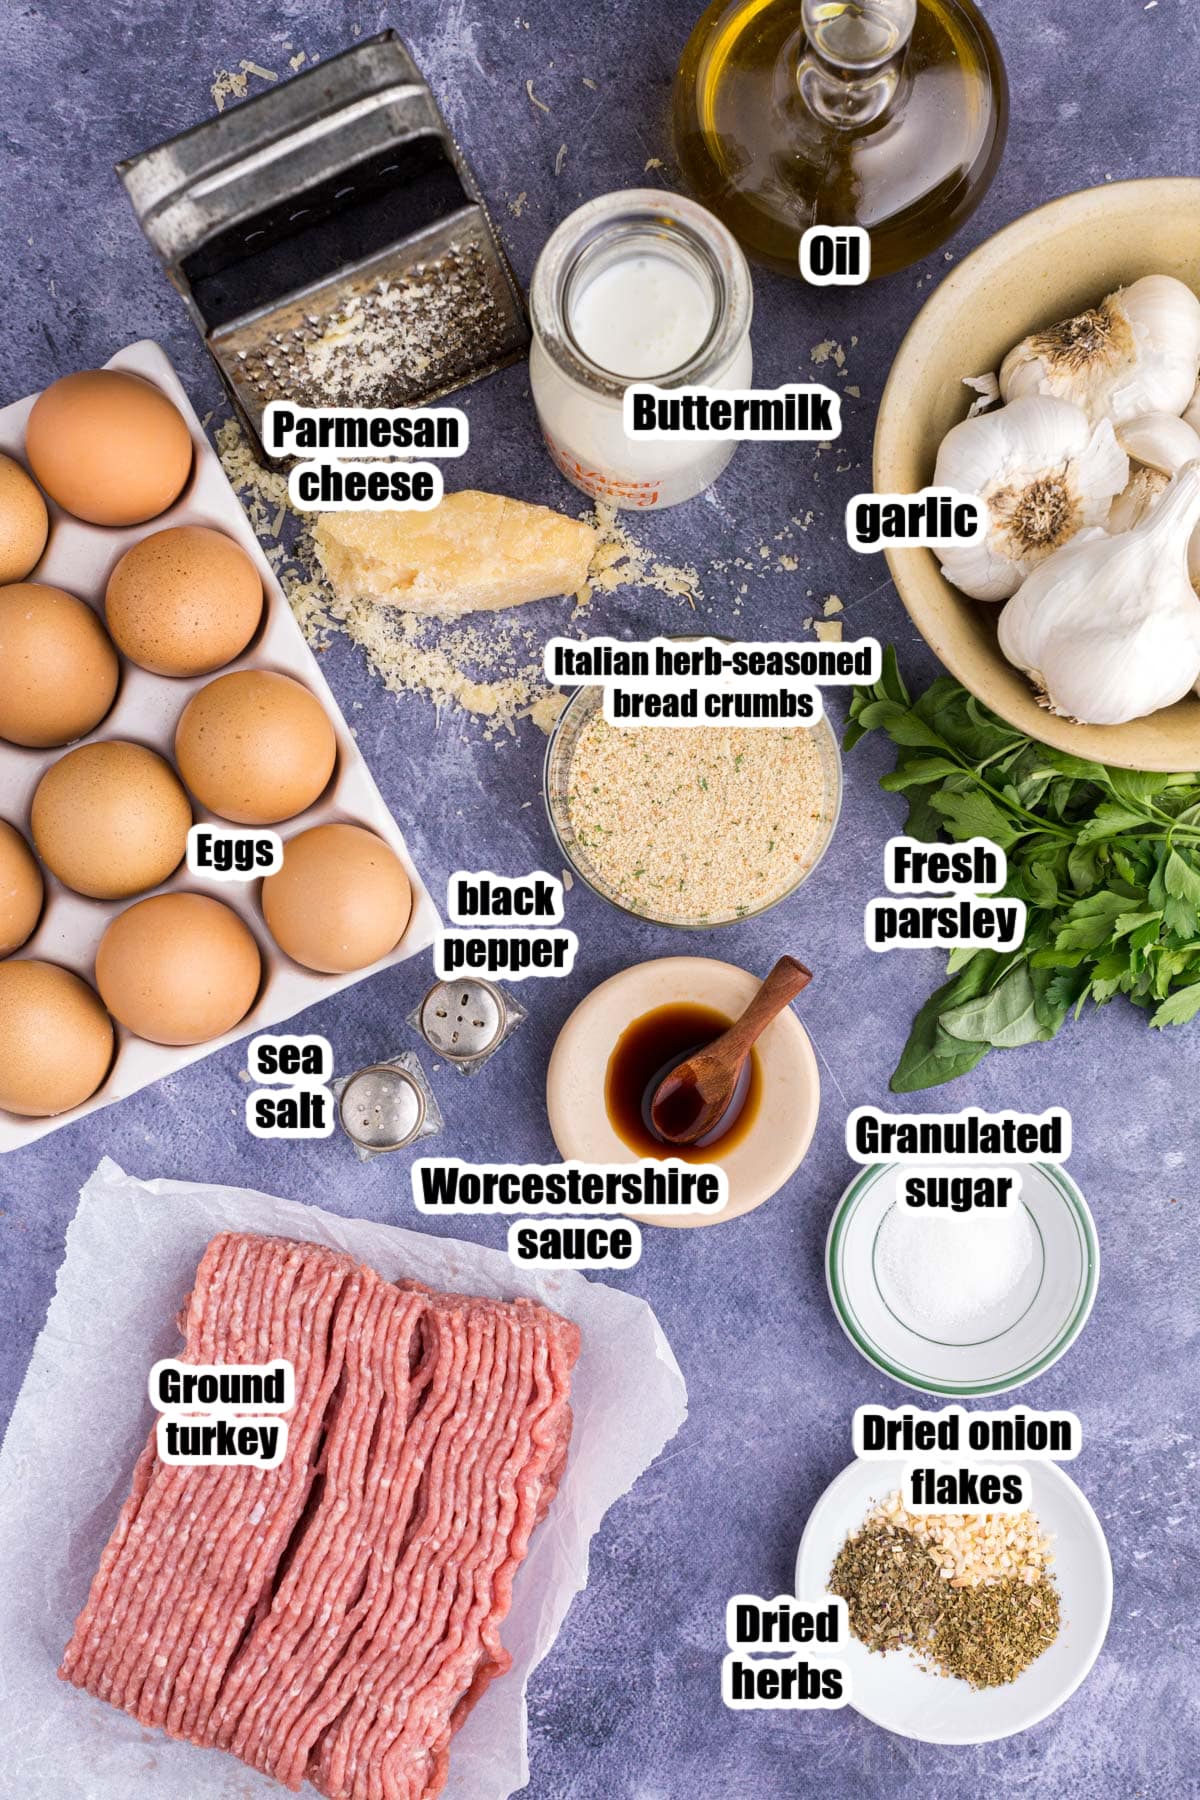 Recipe ingredients for turkey meatballs in sauce.